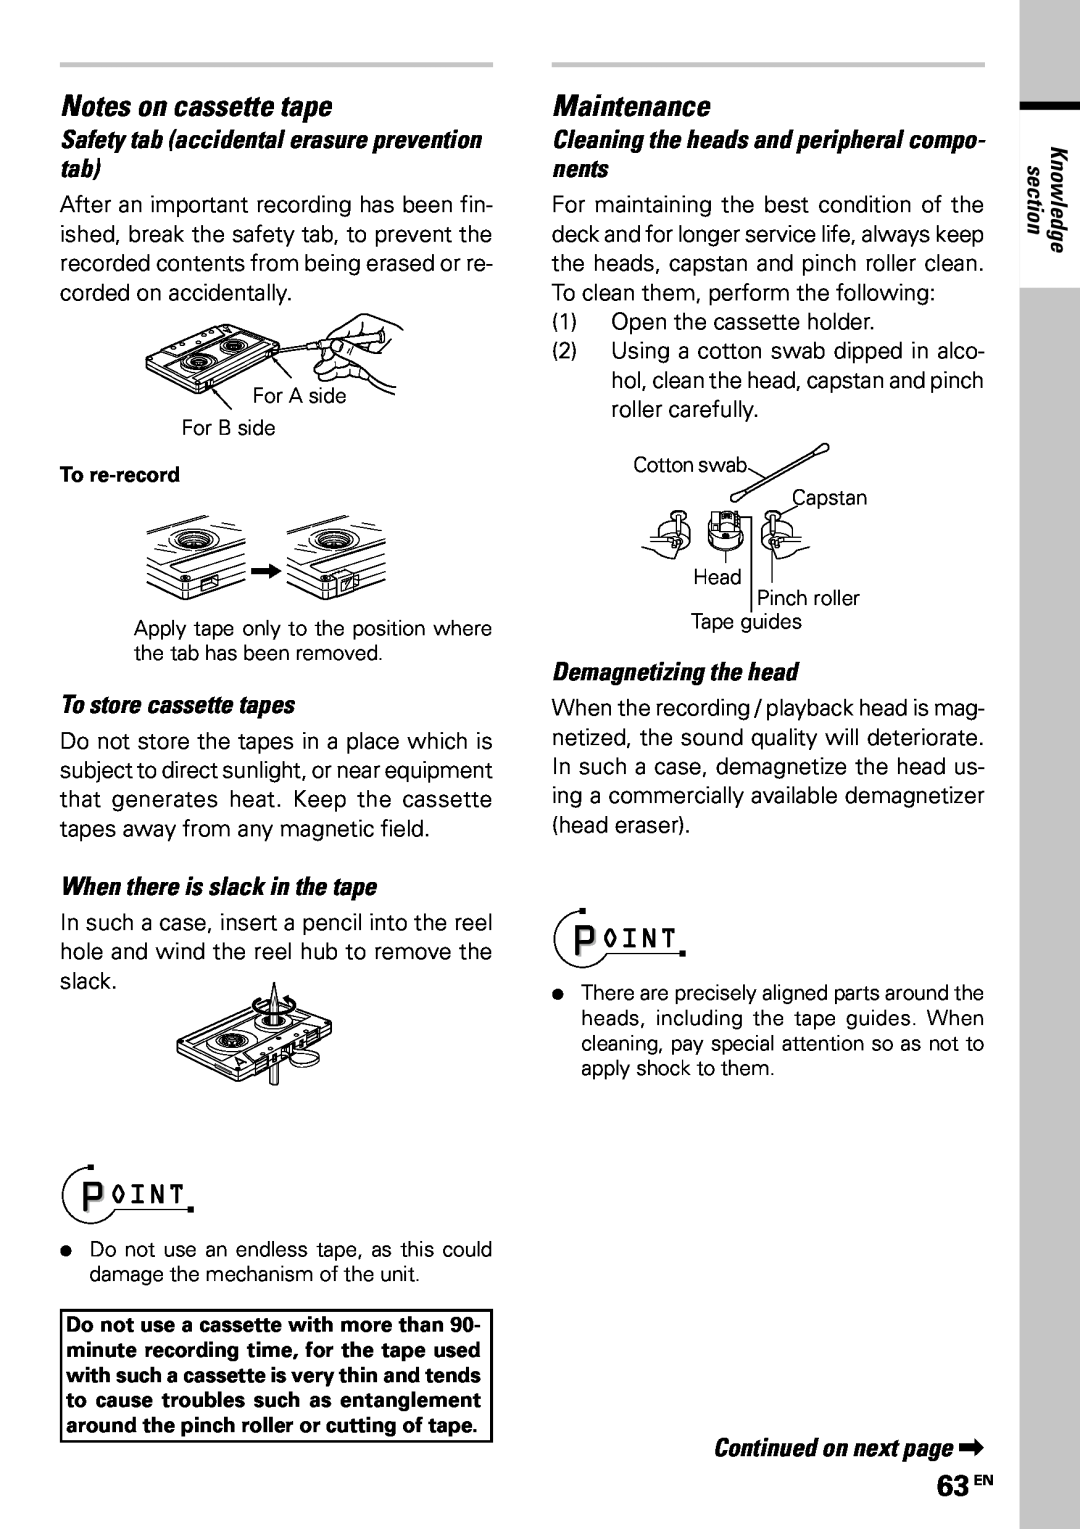 Kenwood MDX-G3 instruction manual Notes on cassette tape, Maintenance, 63 EN, Safety tab accidental erasure prevention tab 